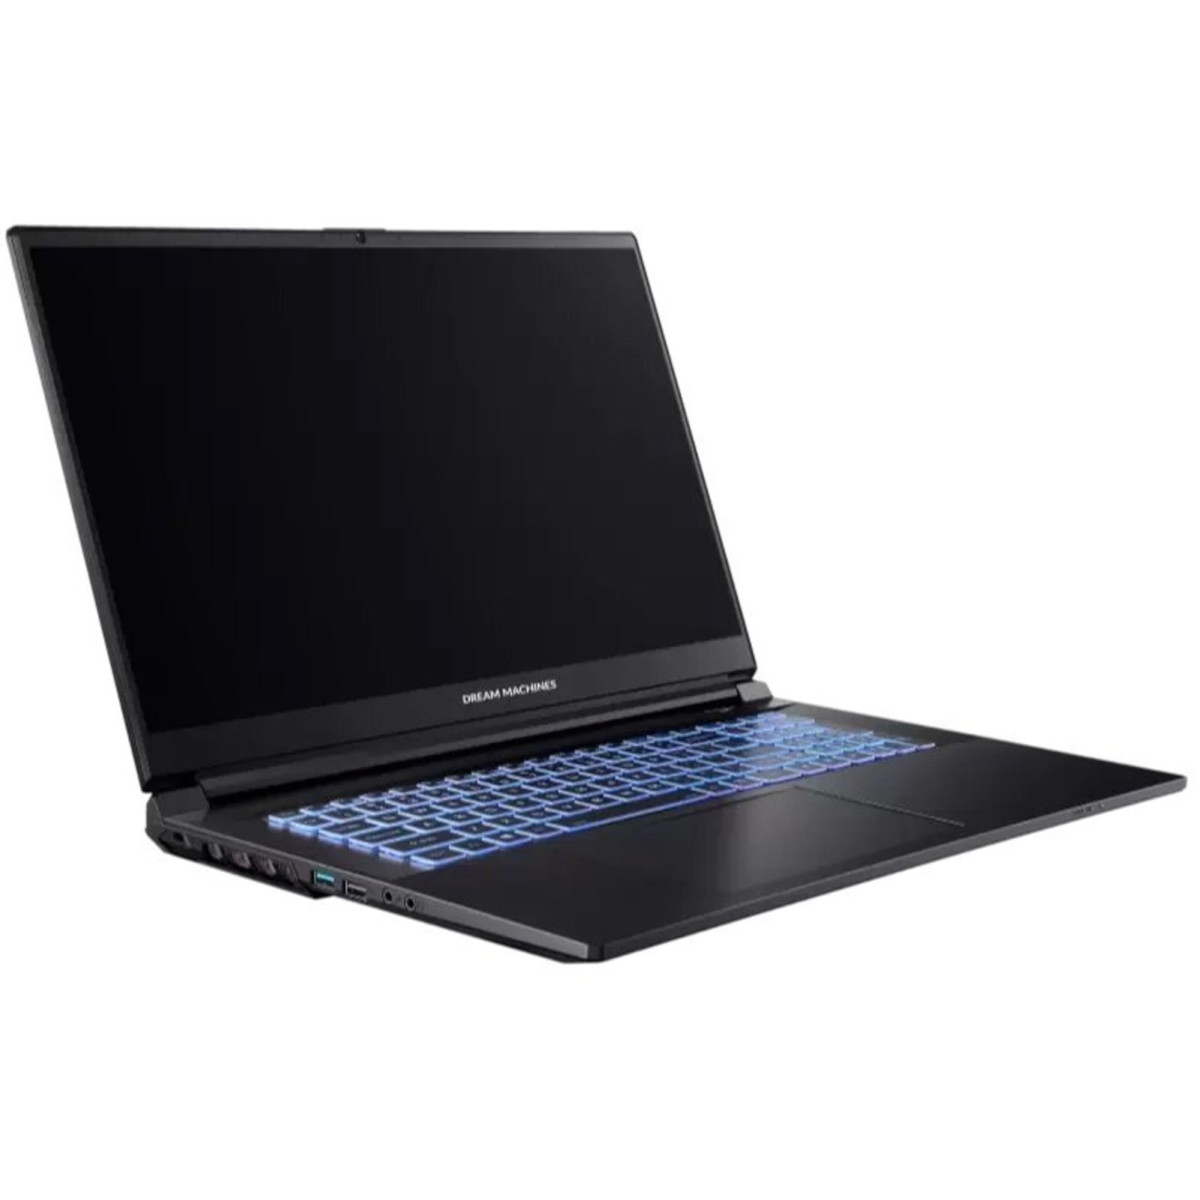 Ігровий ноутбук Dream Machines RG3050-17 Black (RG3050-17UA51)